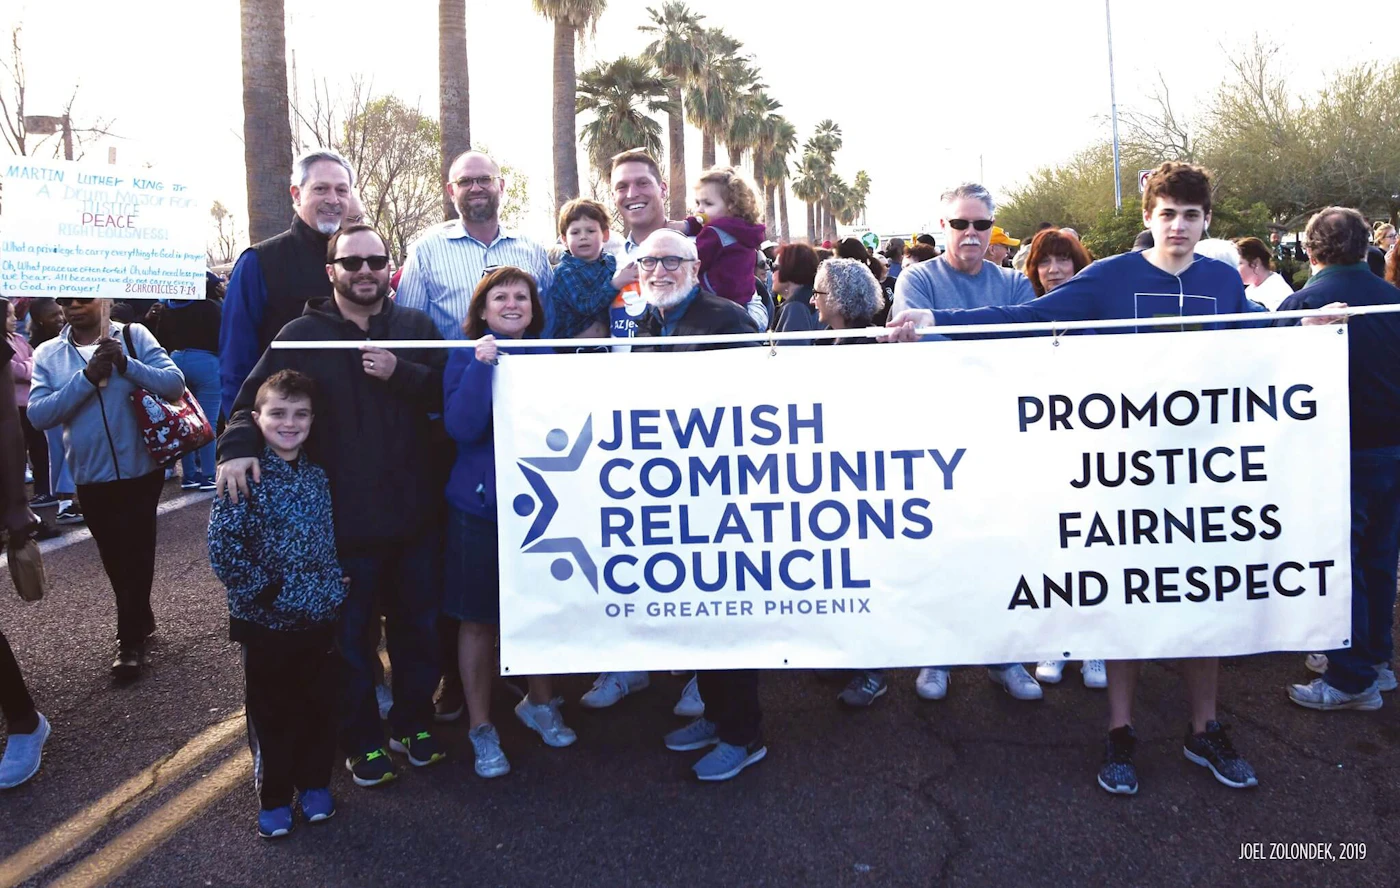 Photo by Joel Zolondek / Jewish Community Relations Council of Greater Phoenix